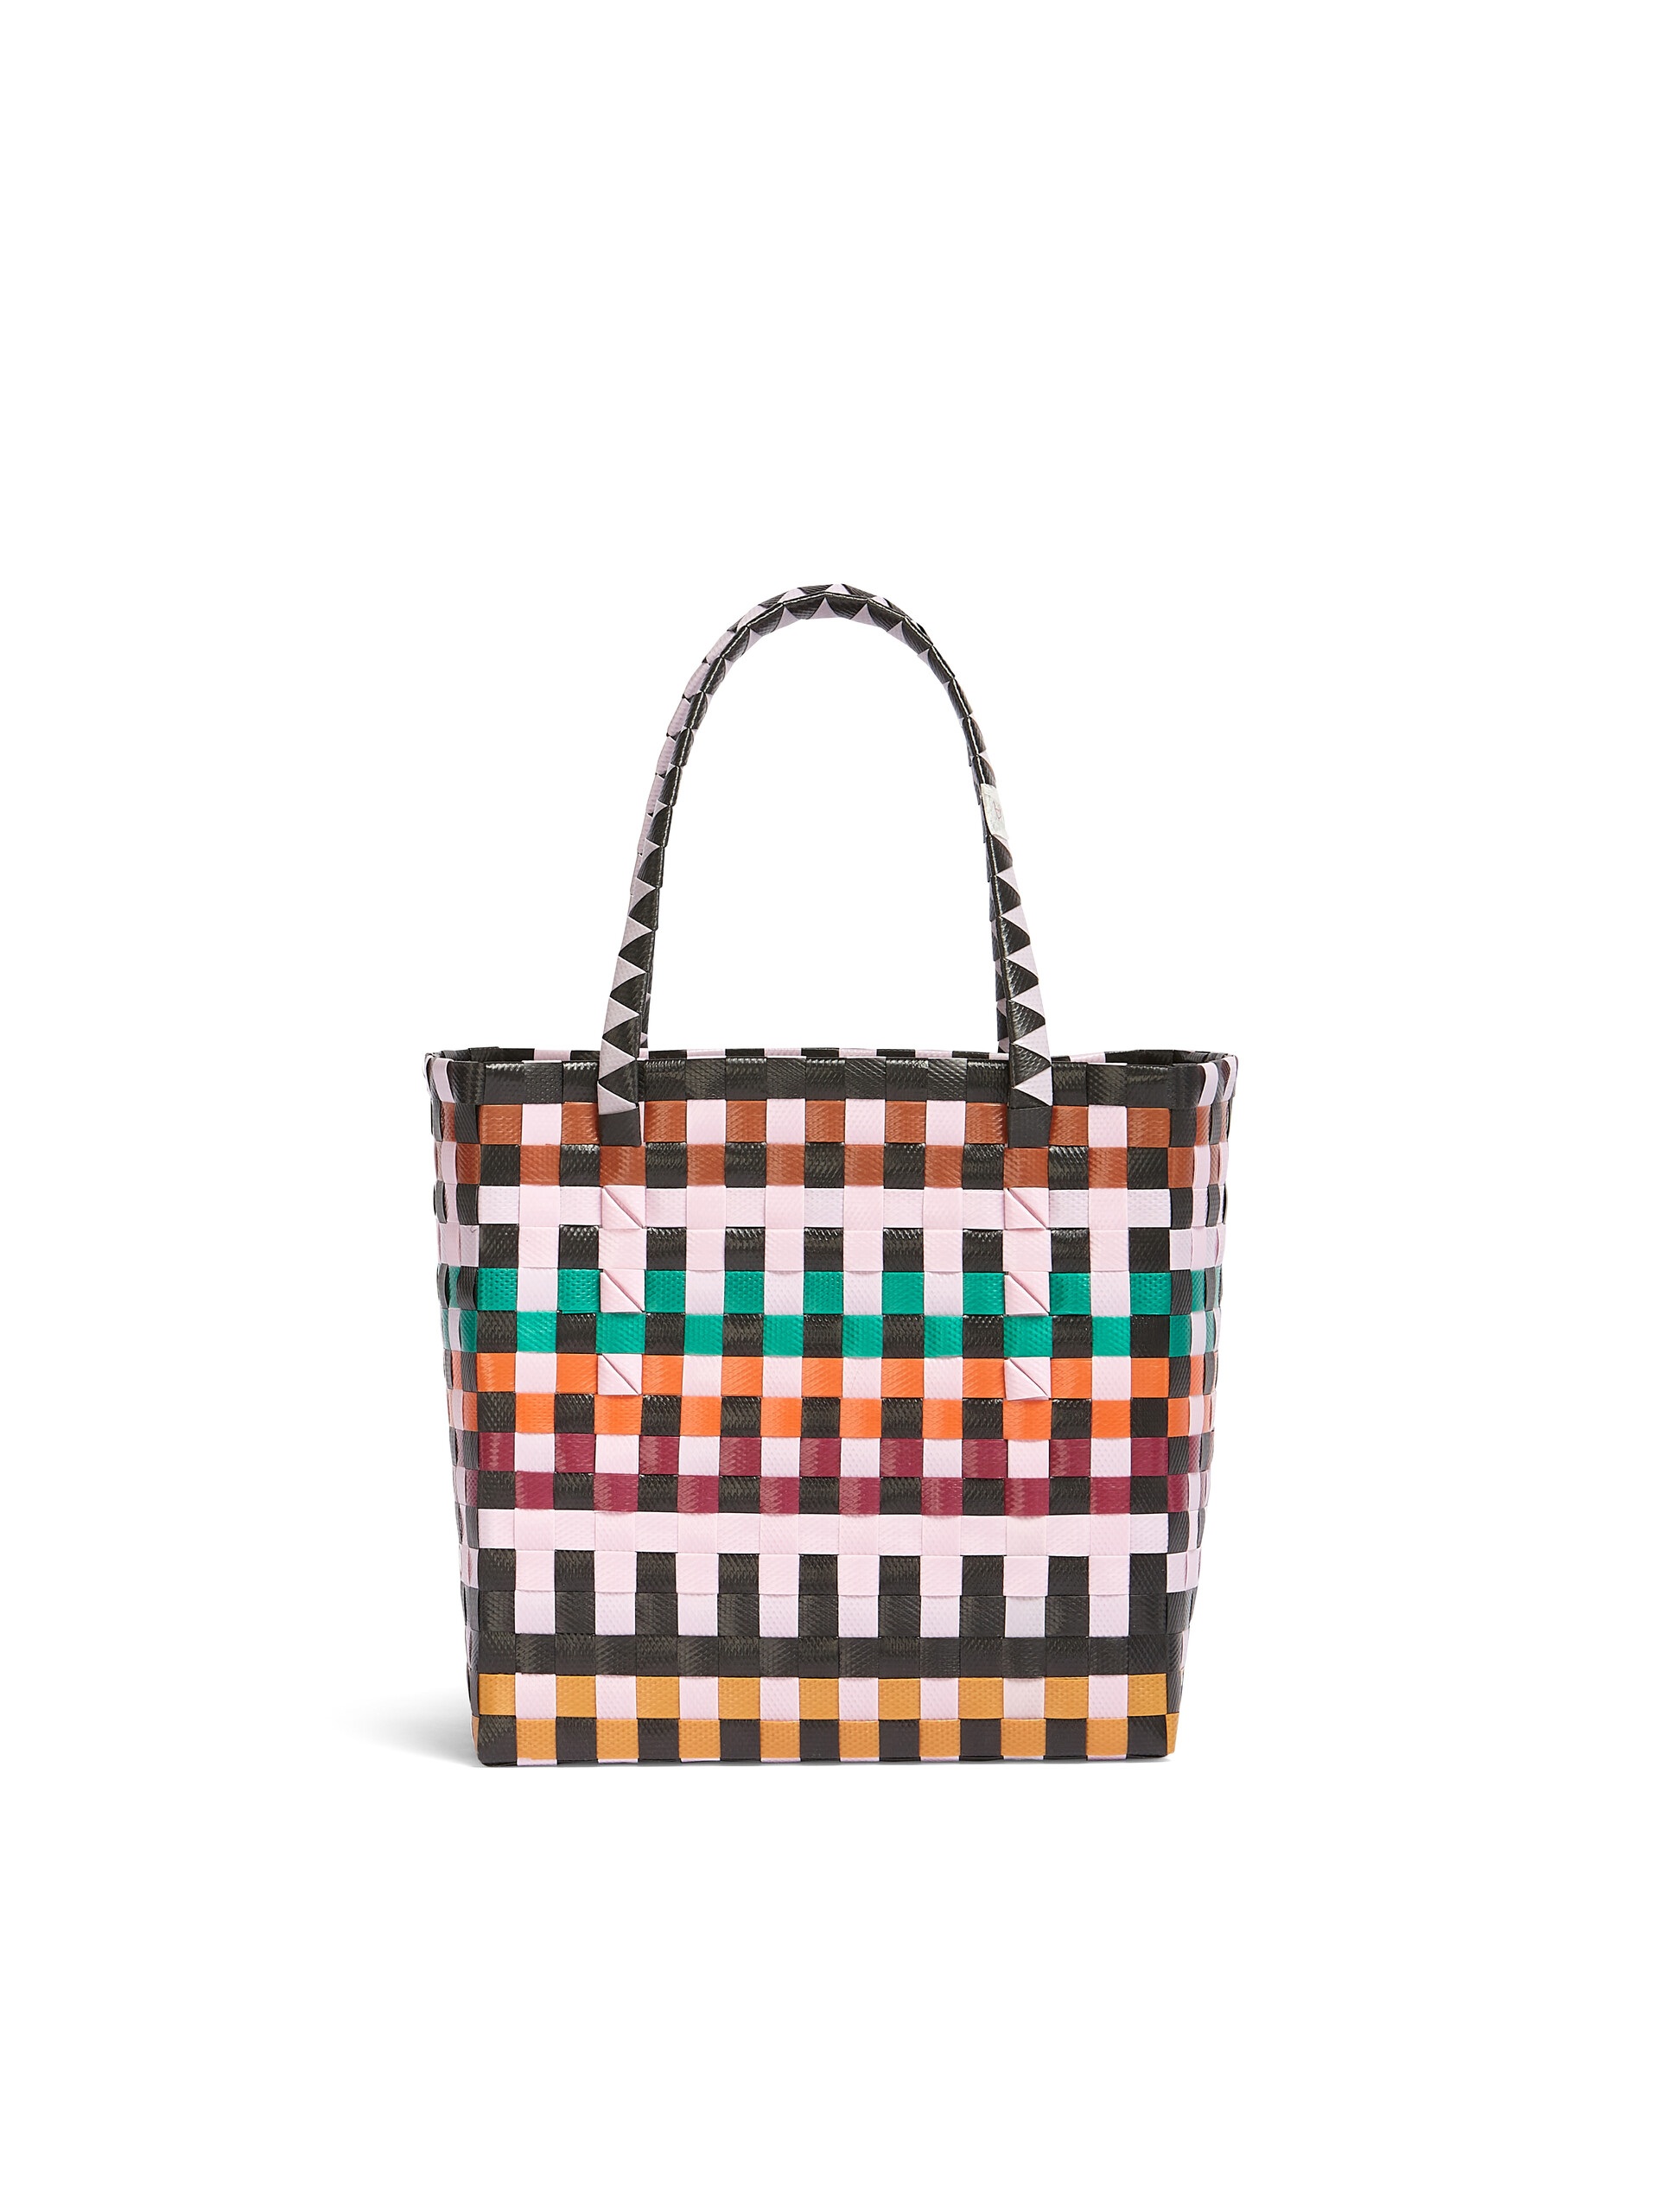 MARNI MARKET MINI BASKET bag in multicolor woven material - Shopping Bags - Image 3